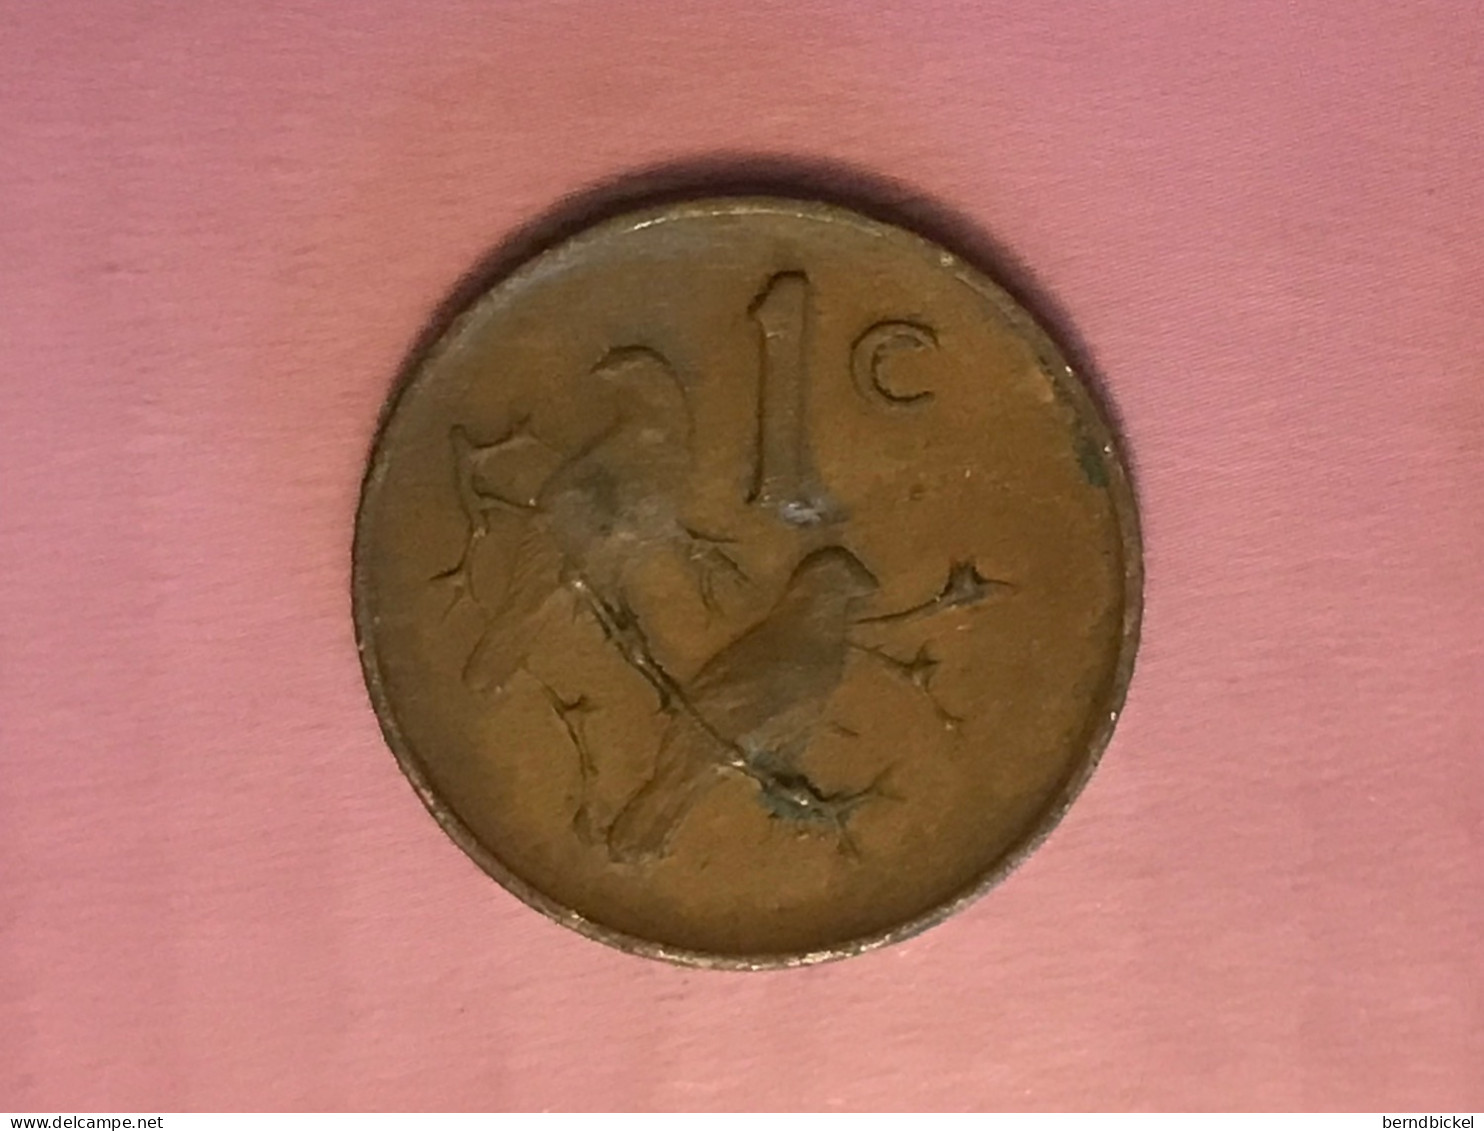 Münze Münzen Umlaufmünze Südafrika 1 Cent 1966 - Afrique Du Sud